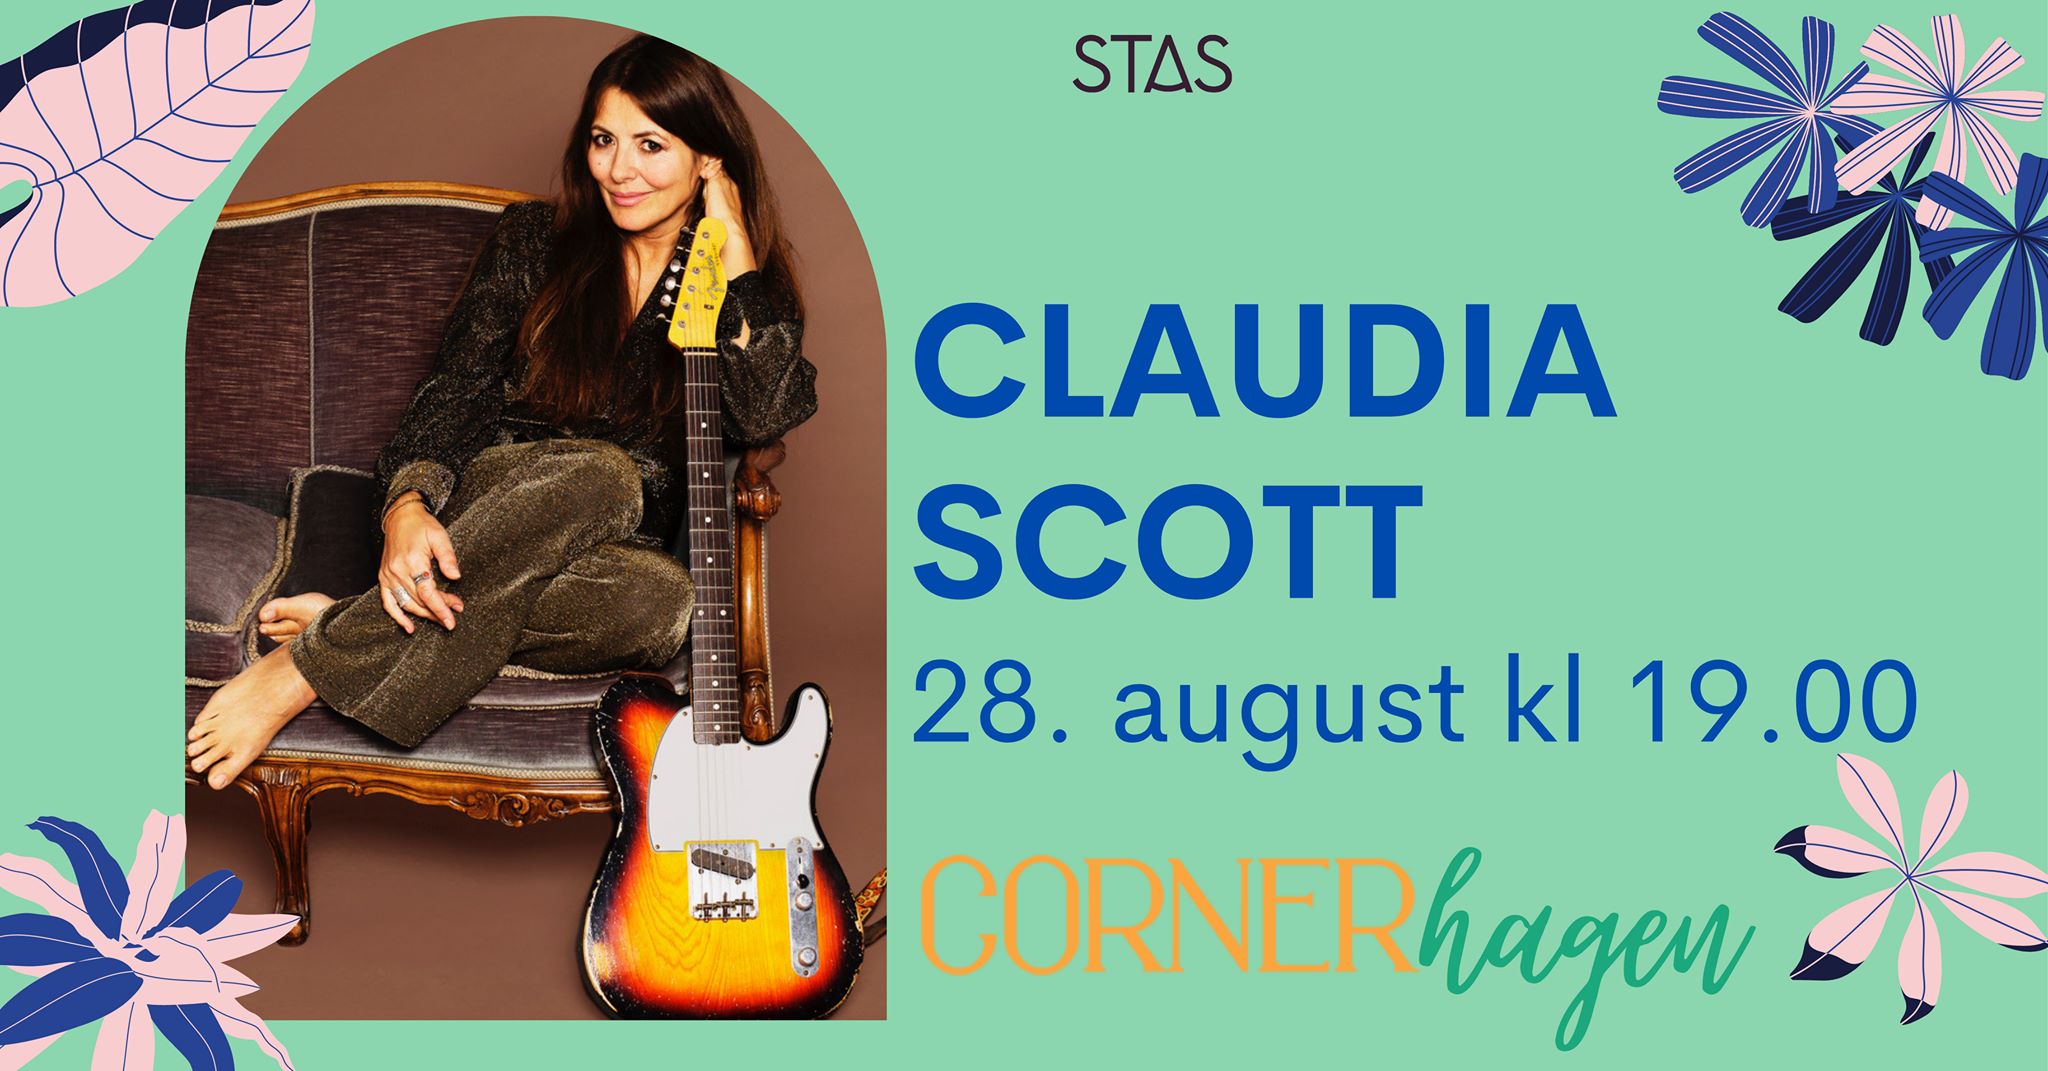 Claudia Scott i Cornerhagen  - Stas Artist 